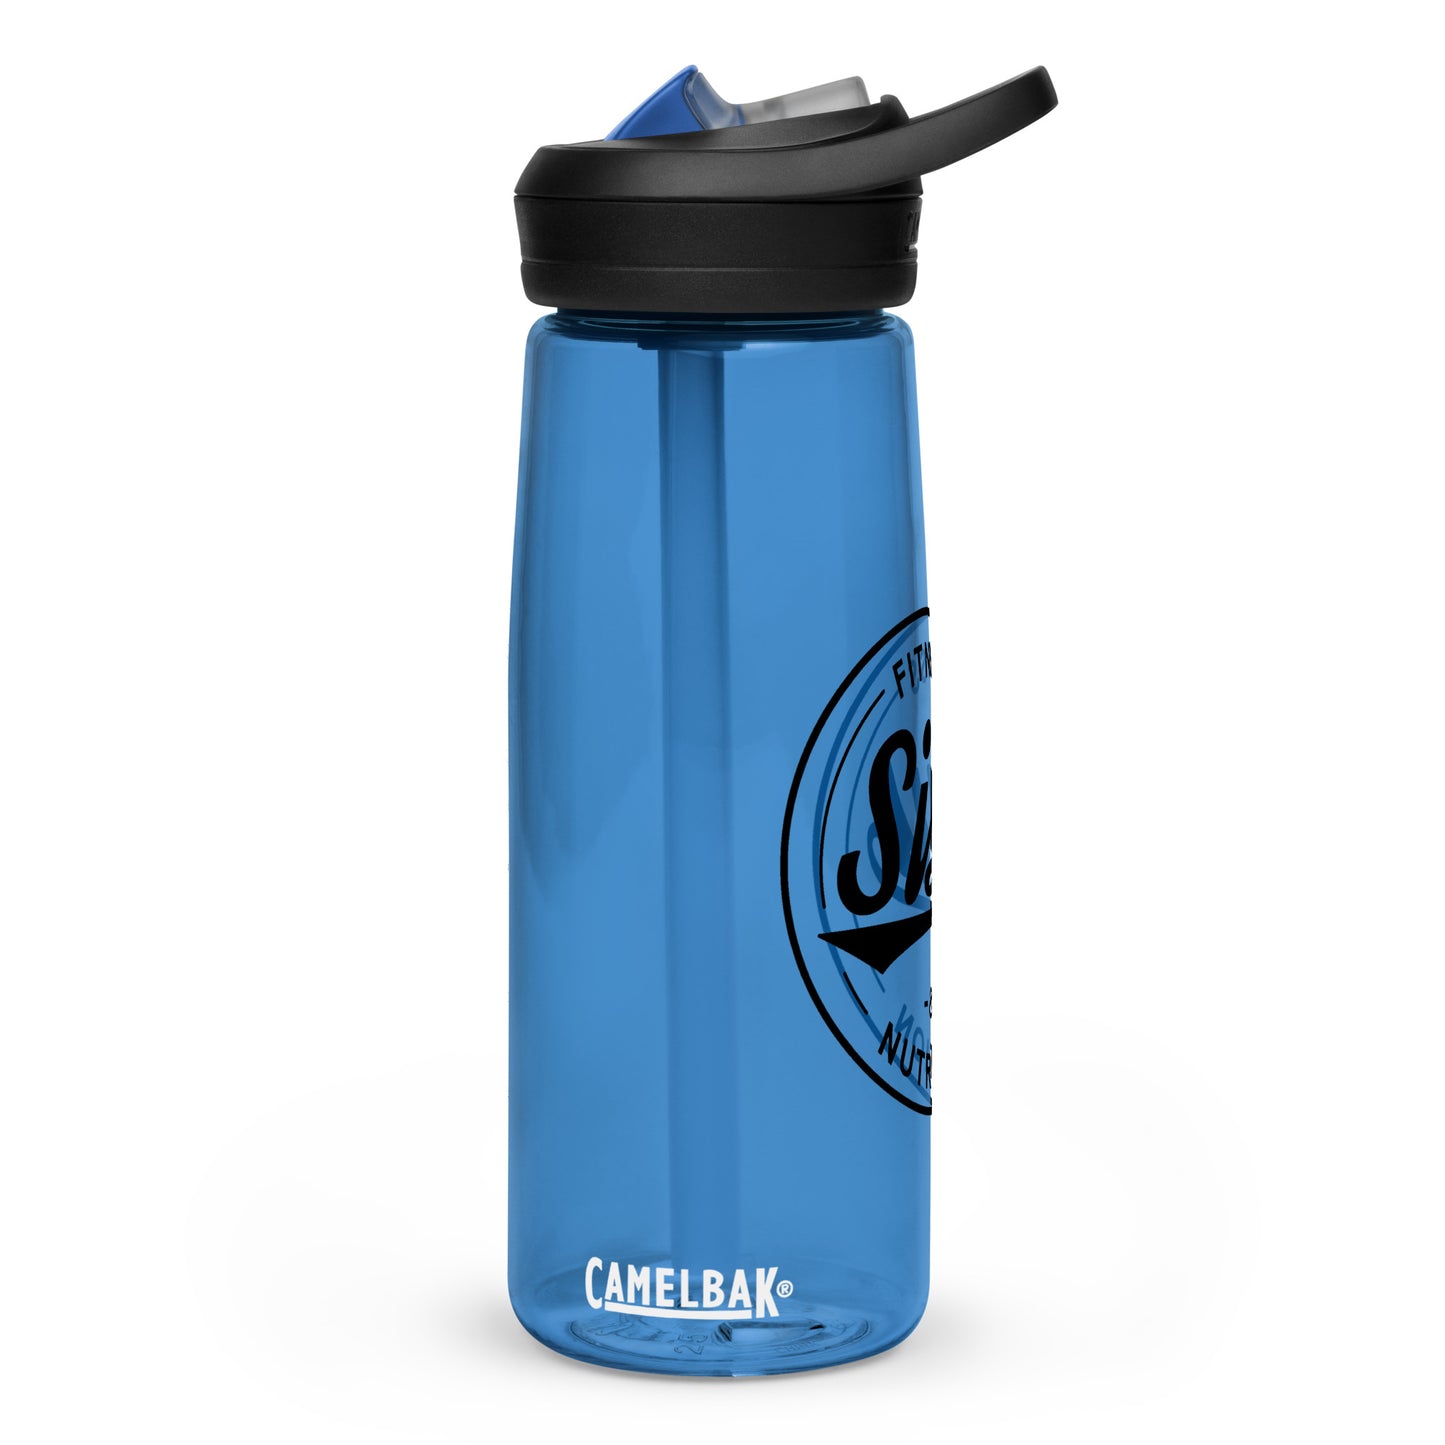 SISU Athletic water bottle